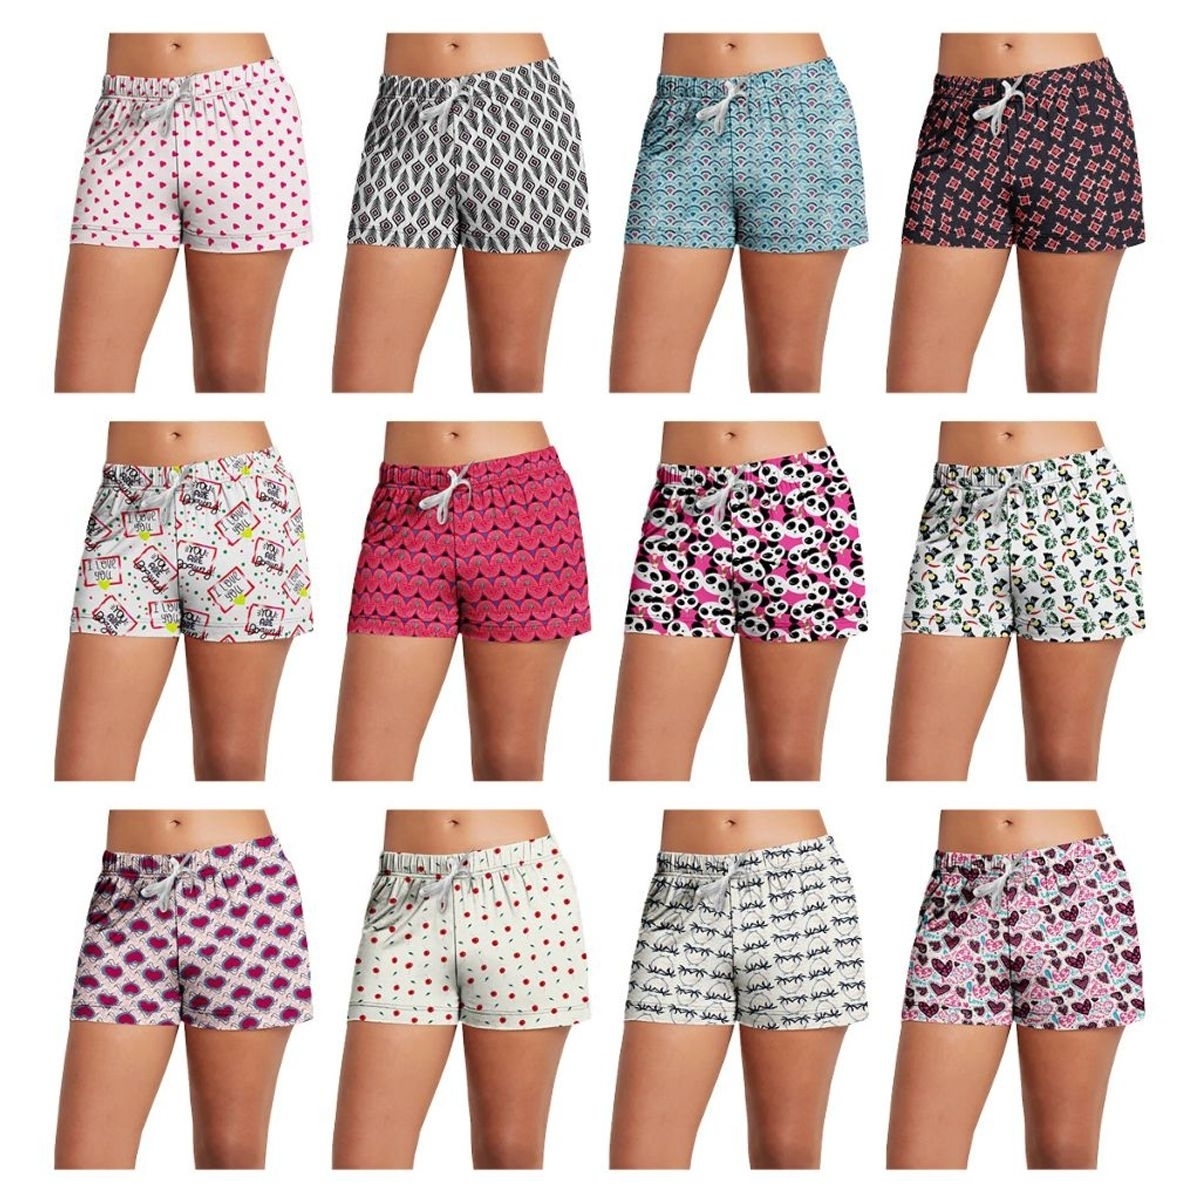 2-Pack: Women's Super-Soft Lightweight Fun Printed Comfy Lounge Bottom Pajama Shorts W/ Drawstring - Small, Love